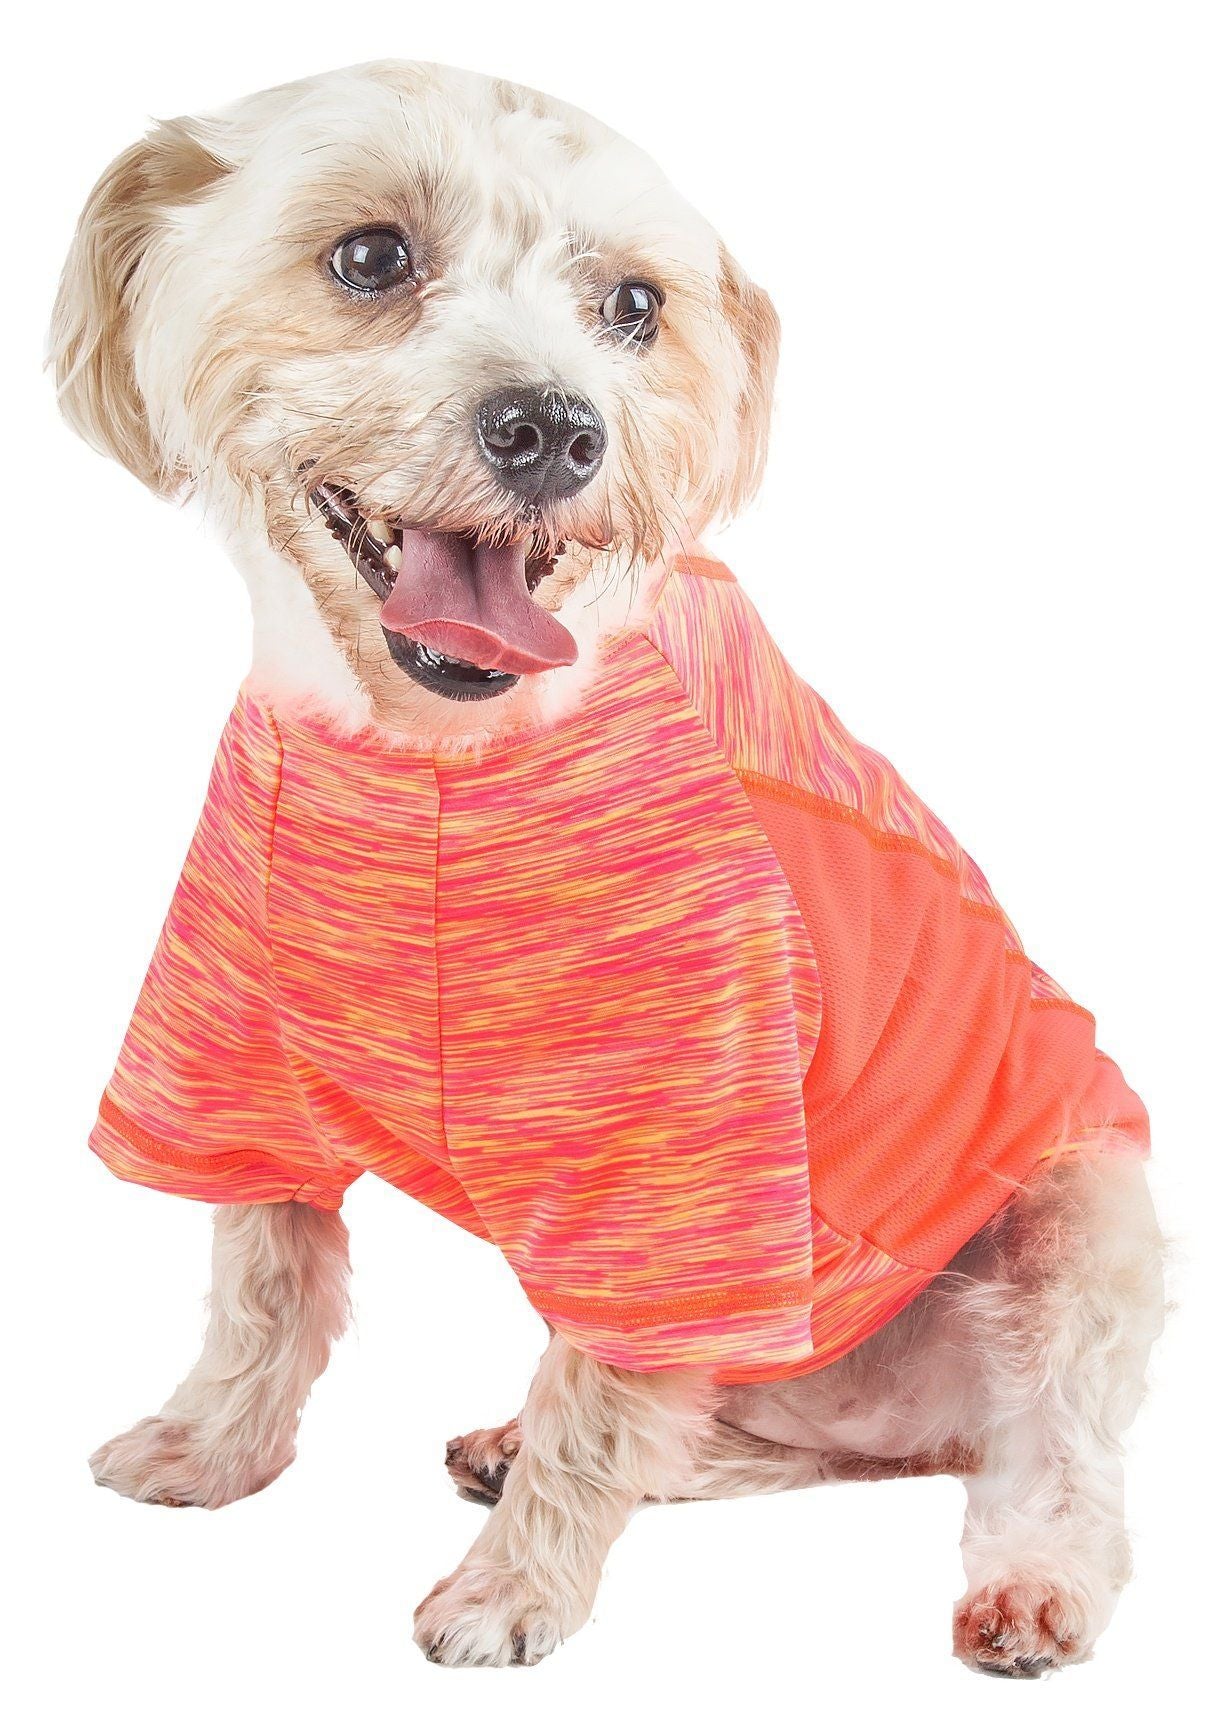 Pet Life ® Active 'Warf Speed' Heathered Ultra-Stretch Yoga Fitness Dog T-Shirt  